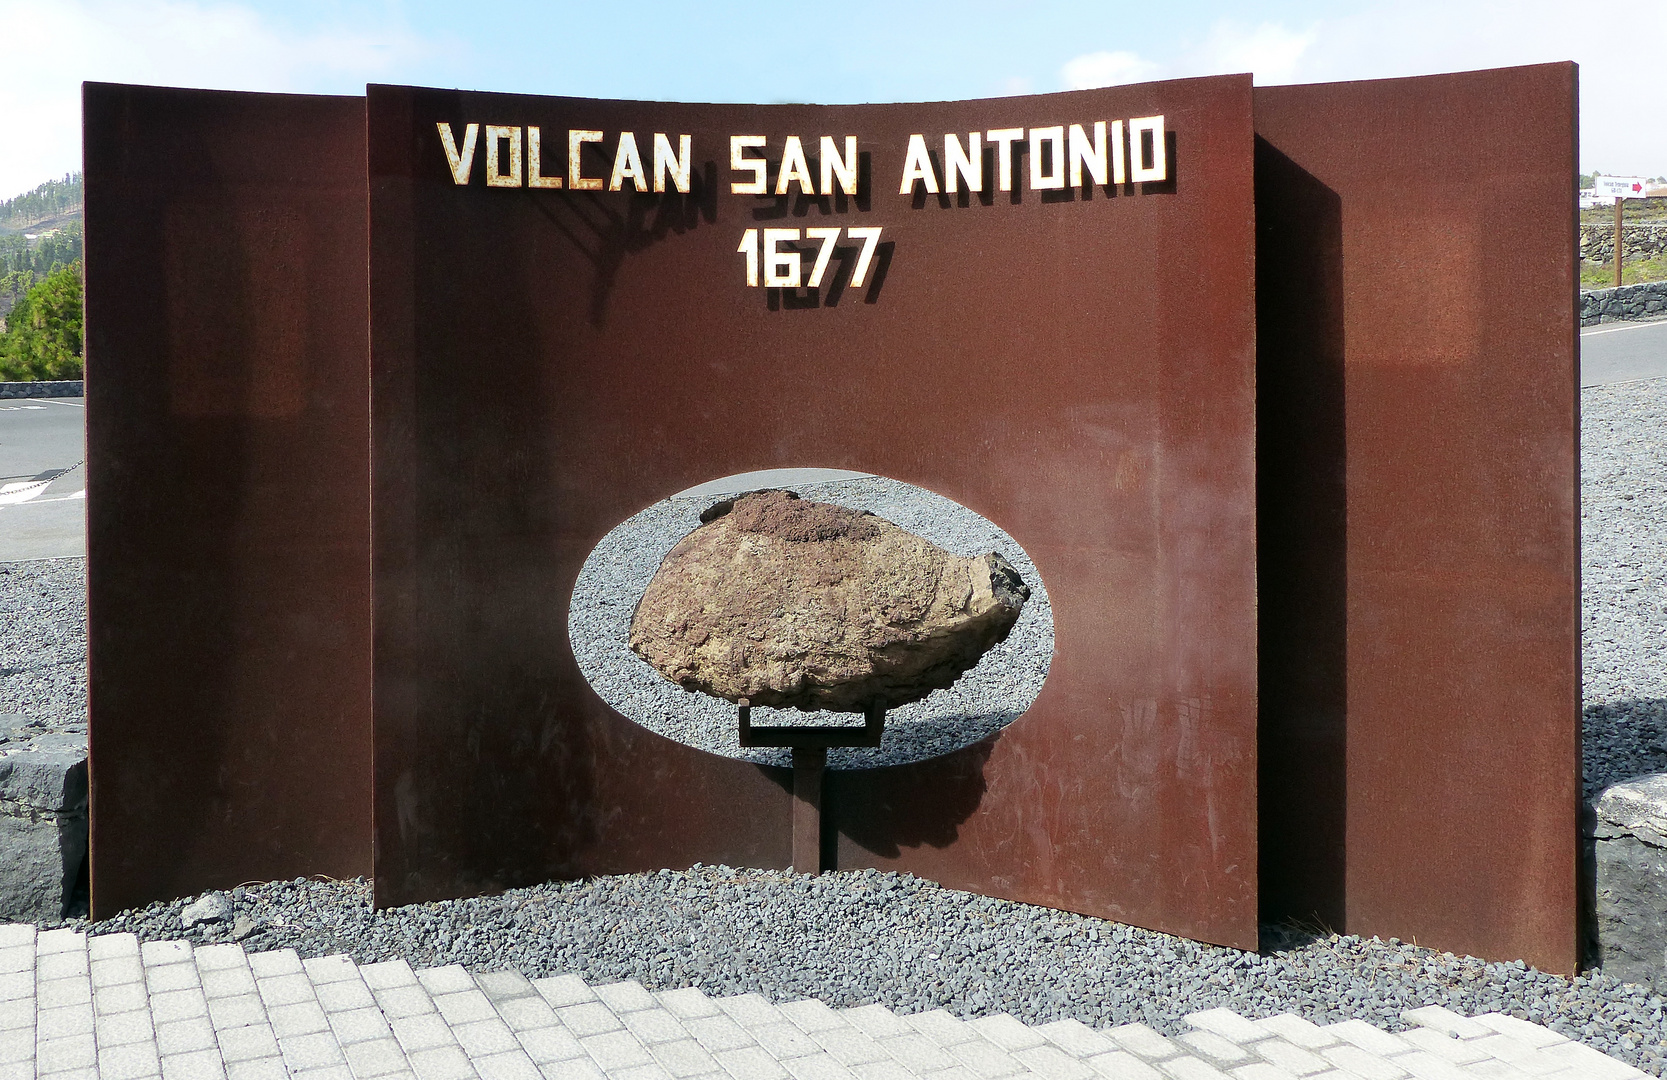 VOLCAN SAN ANTONIO - 1677